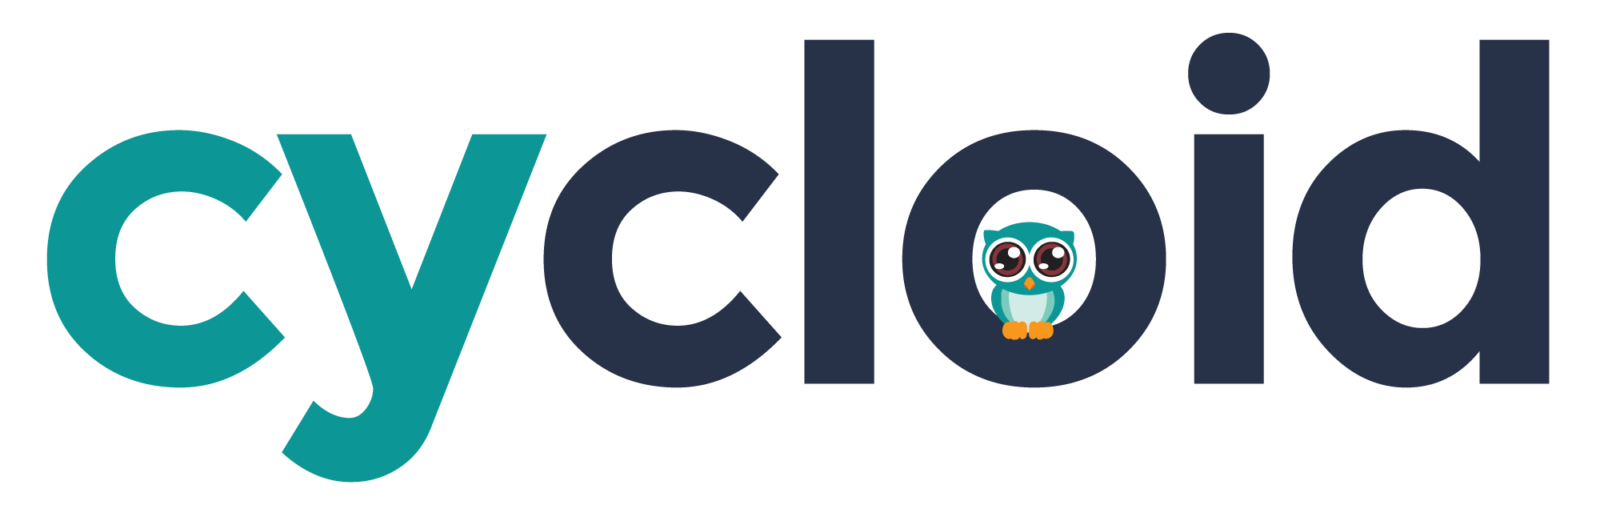 Logo Cycloid